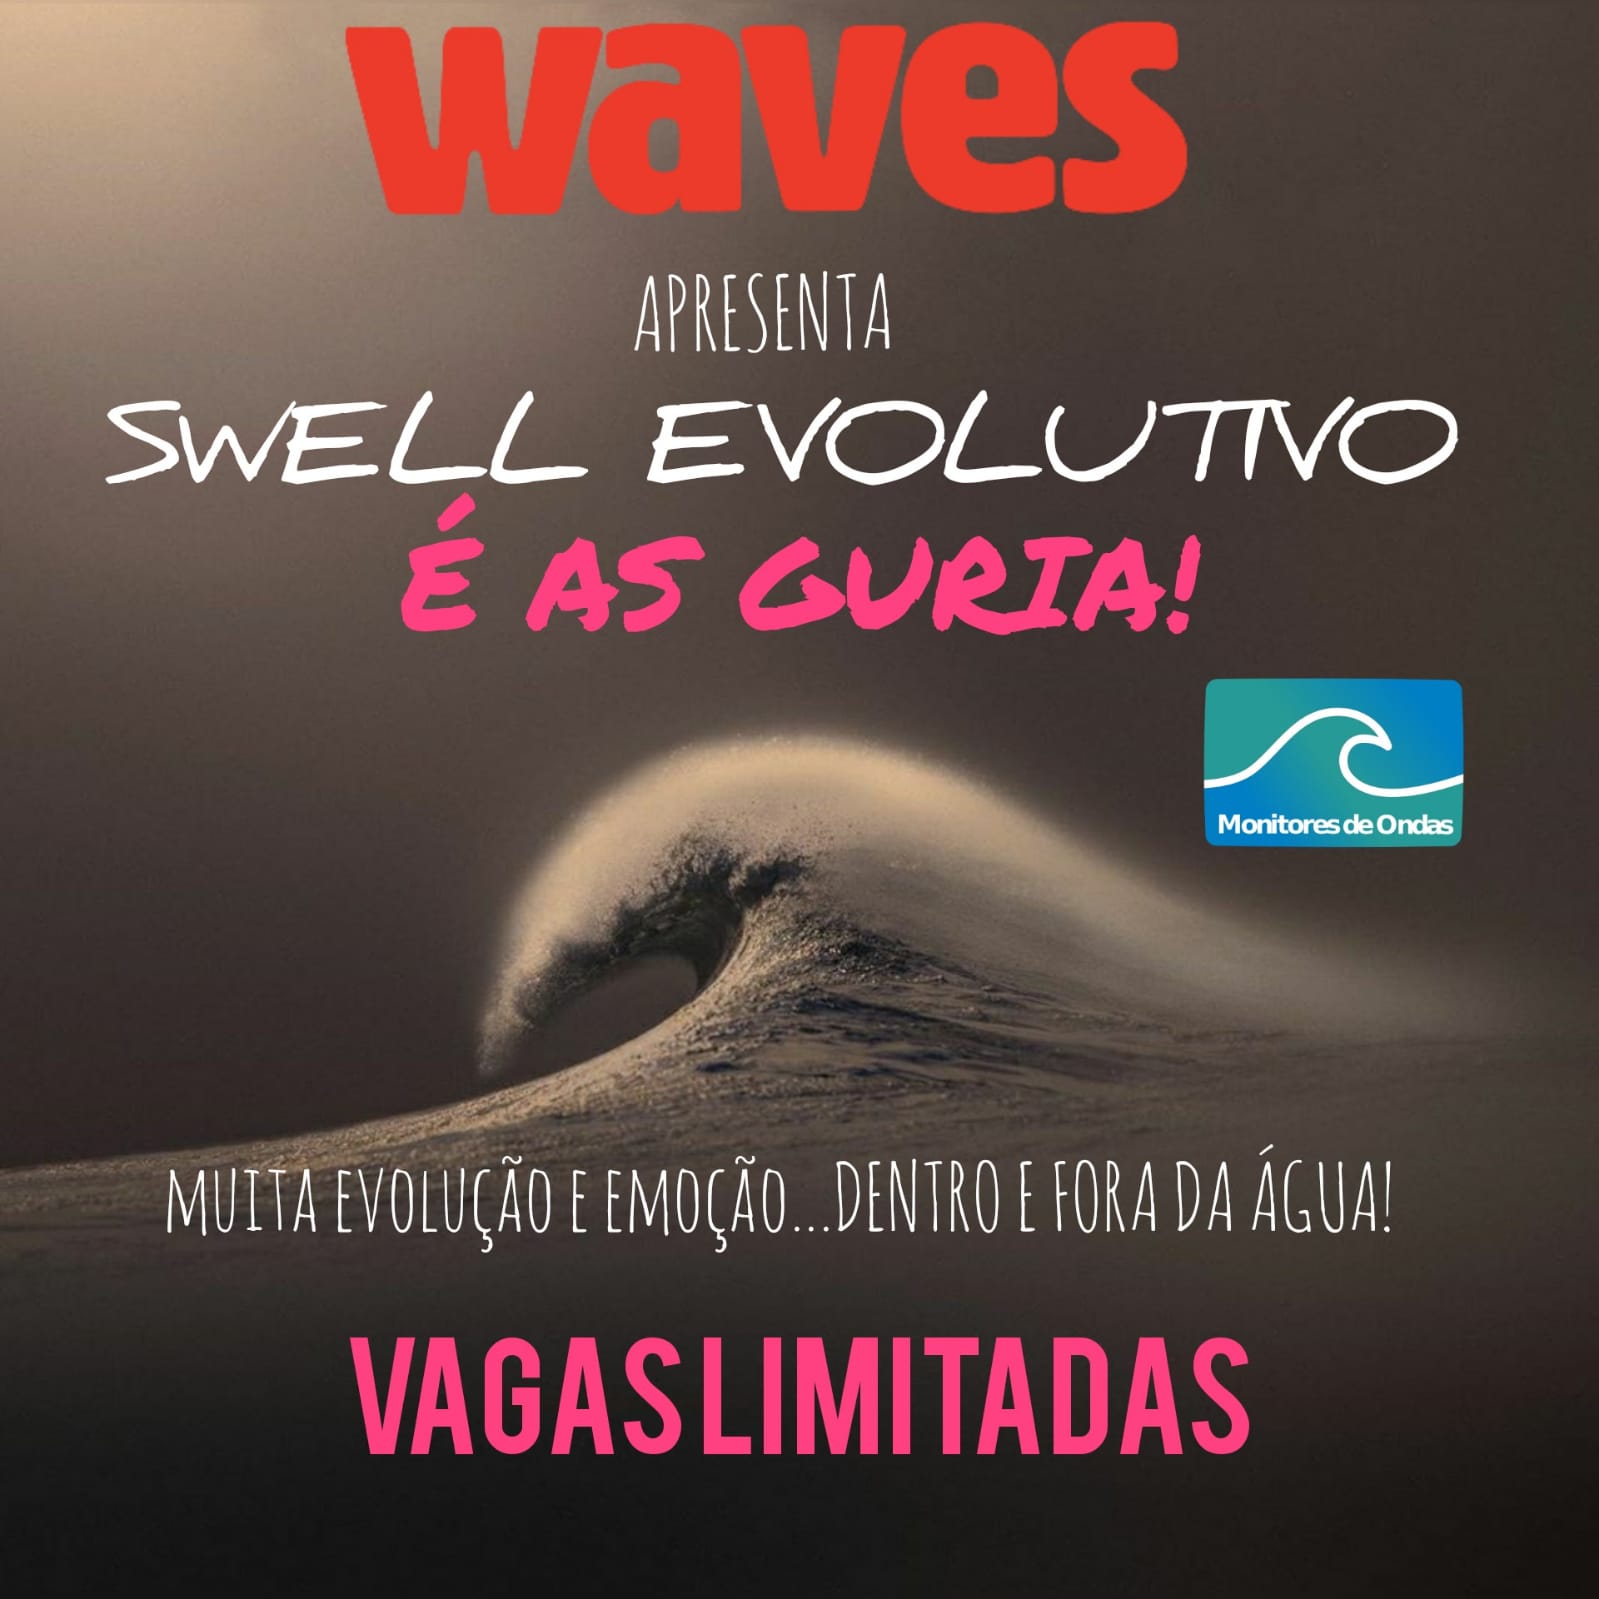 Waves apoia evento.